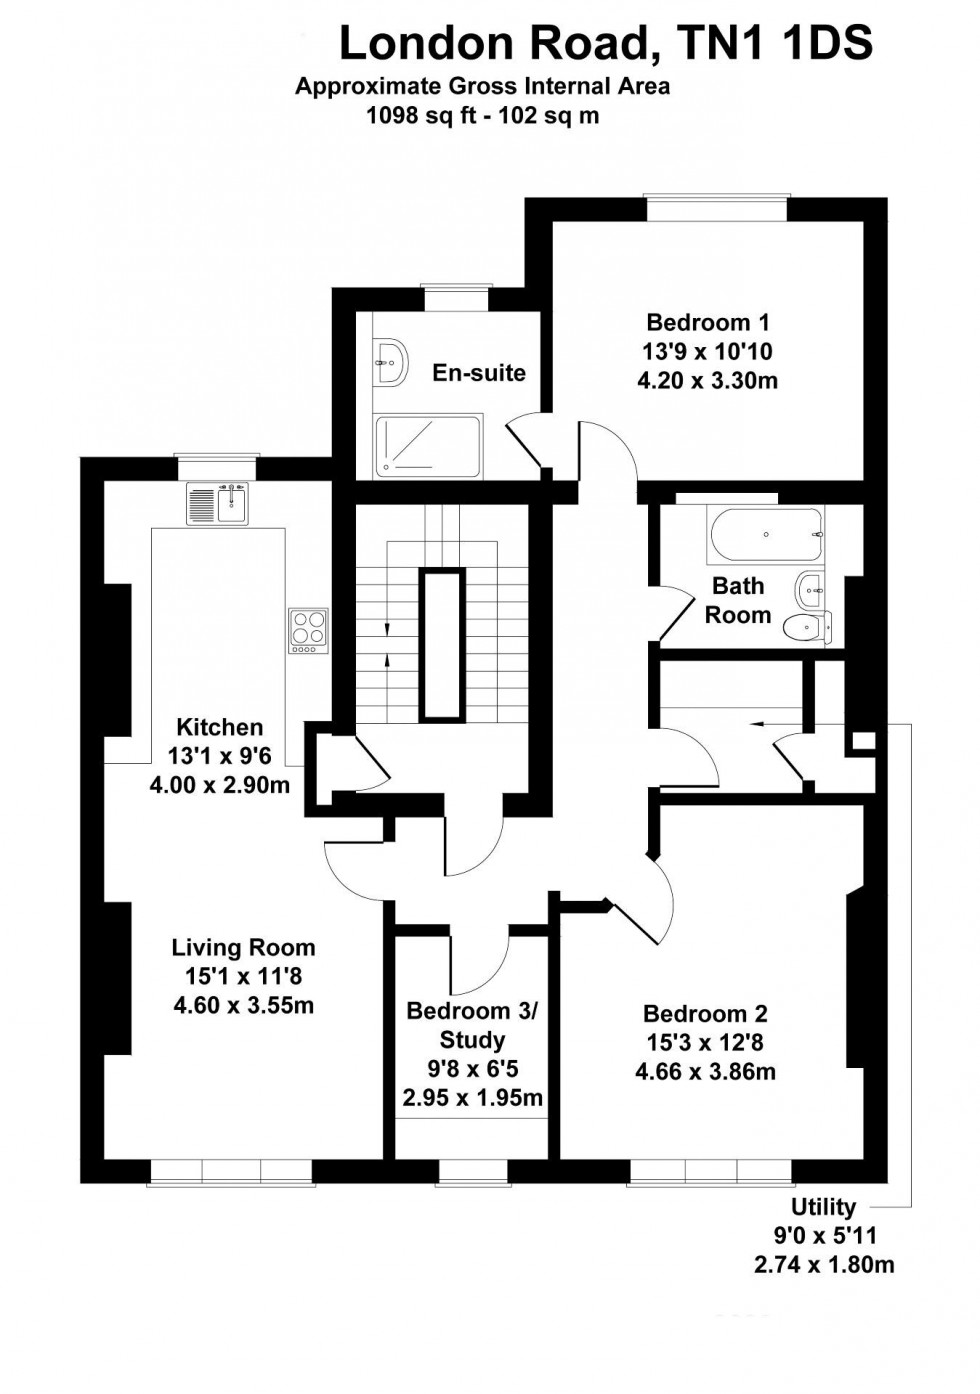 Floorplan for 3 Bedroom 2 Bathroom Apartment, London Road, Tunbridge Wells